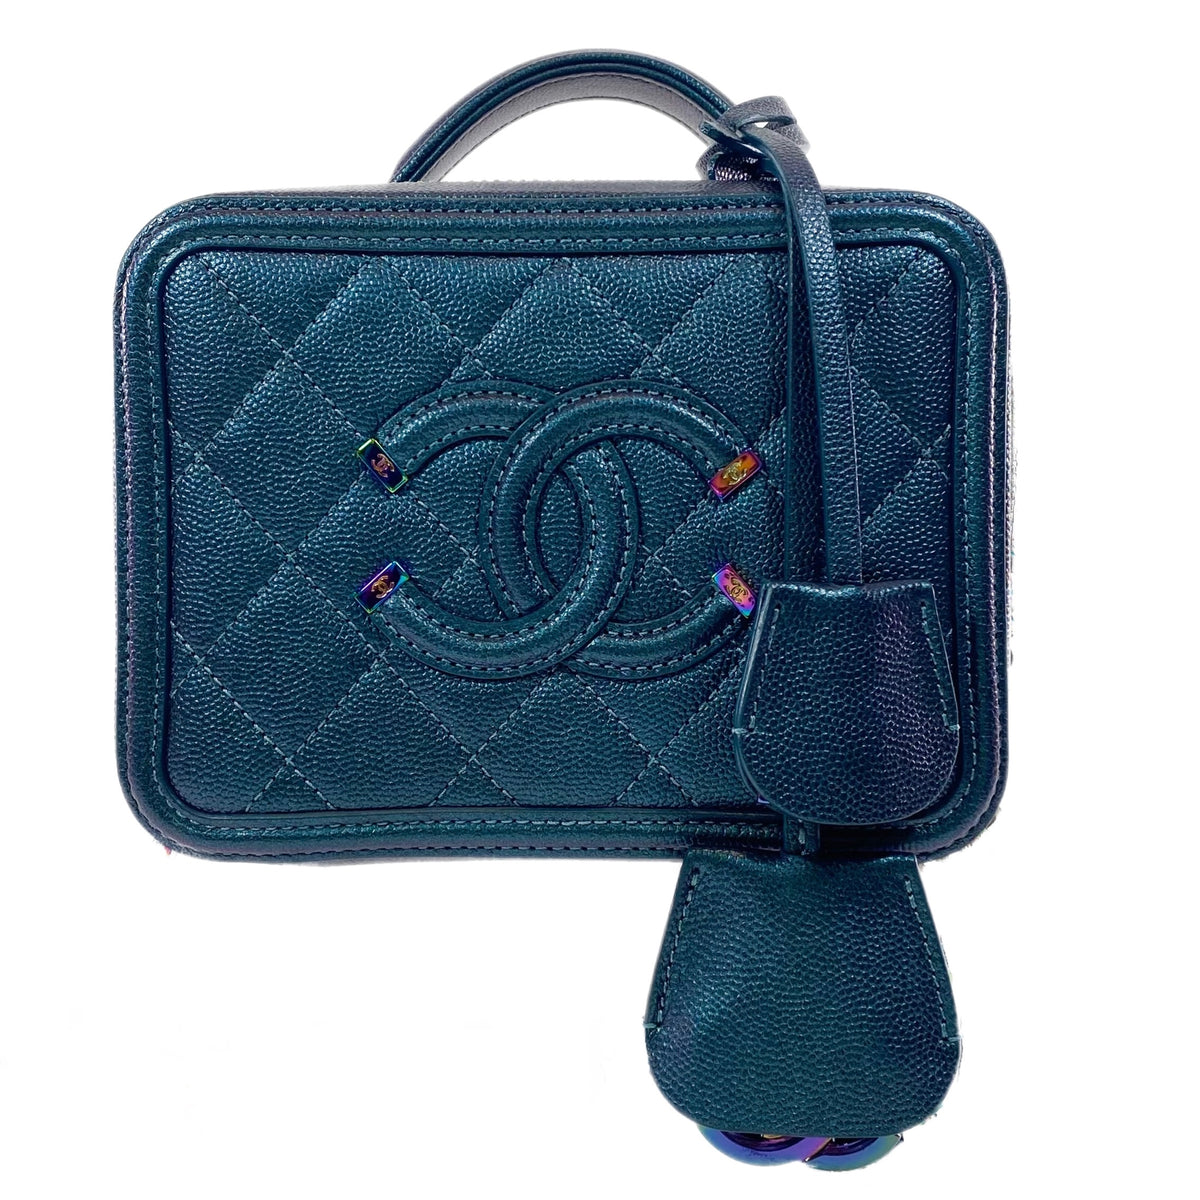 Chanel Dark Turquoise Medium Filigree Vanity Case of Grained Metallic  Lambskin Leather with Iridescent Hardware, Handbags and Accessories Online, Ecommerce Retail